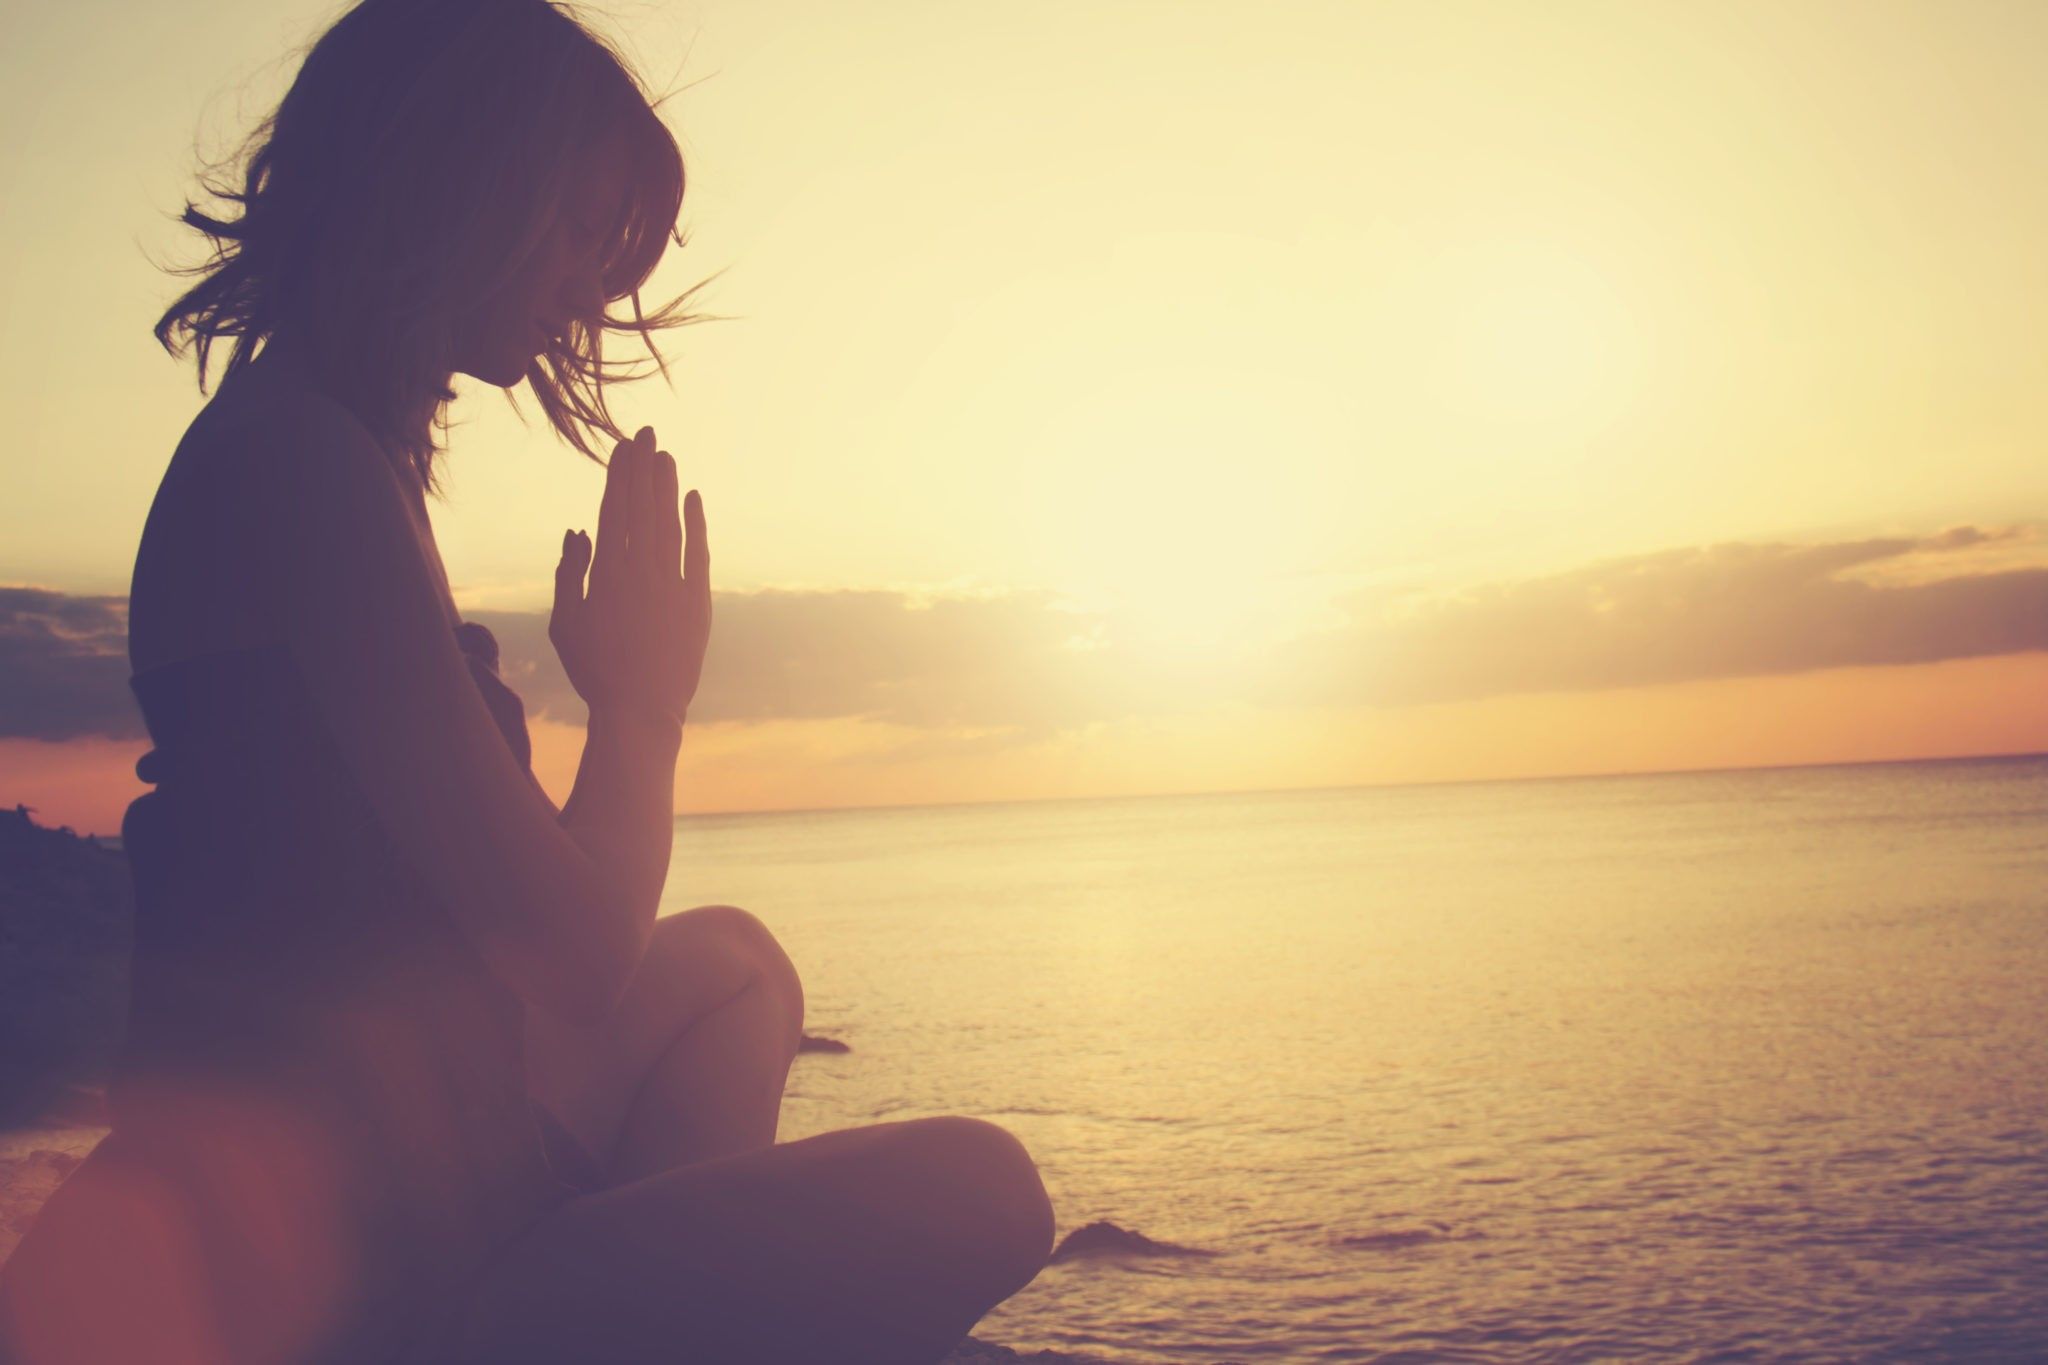 yoga benefits - self-knowledge through mindfulness